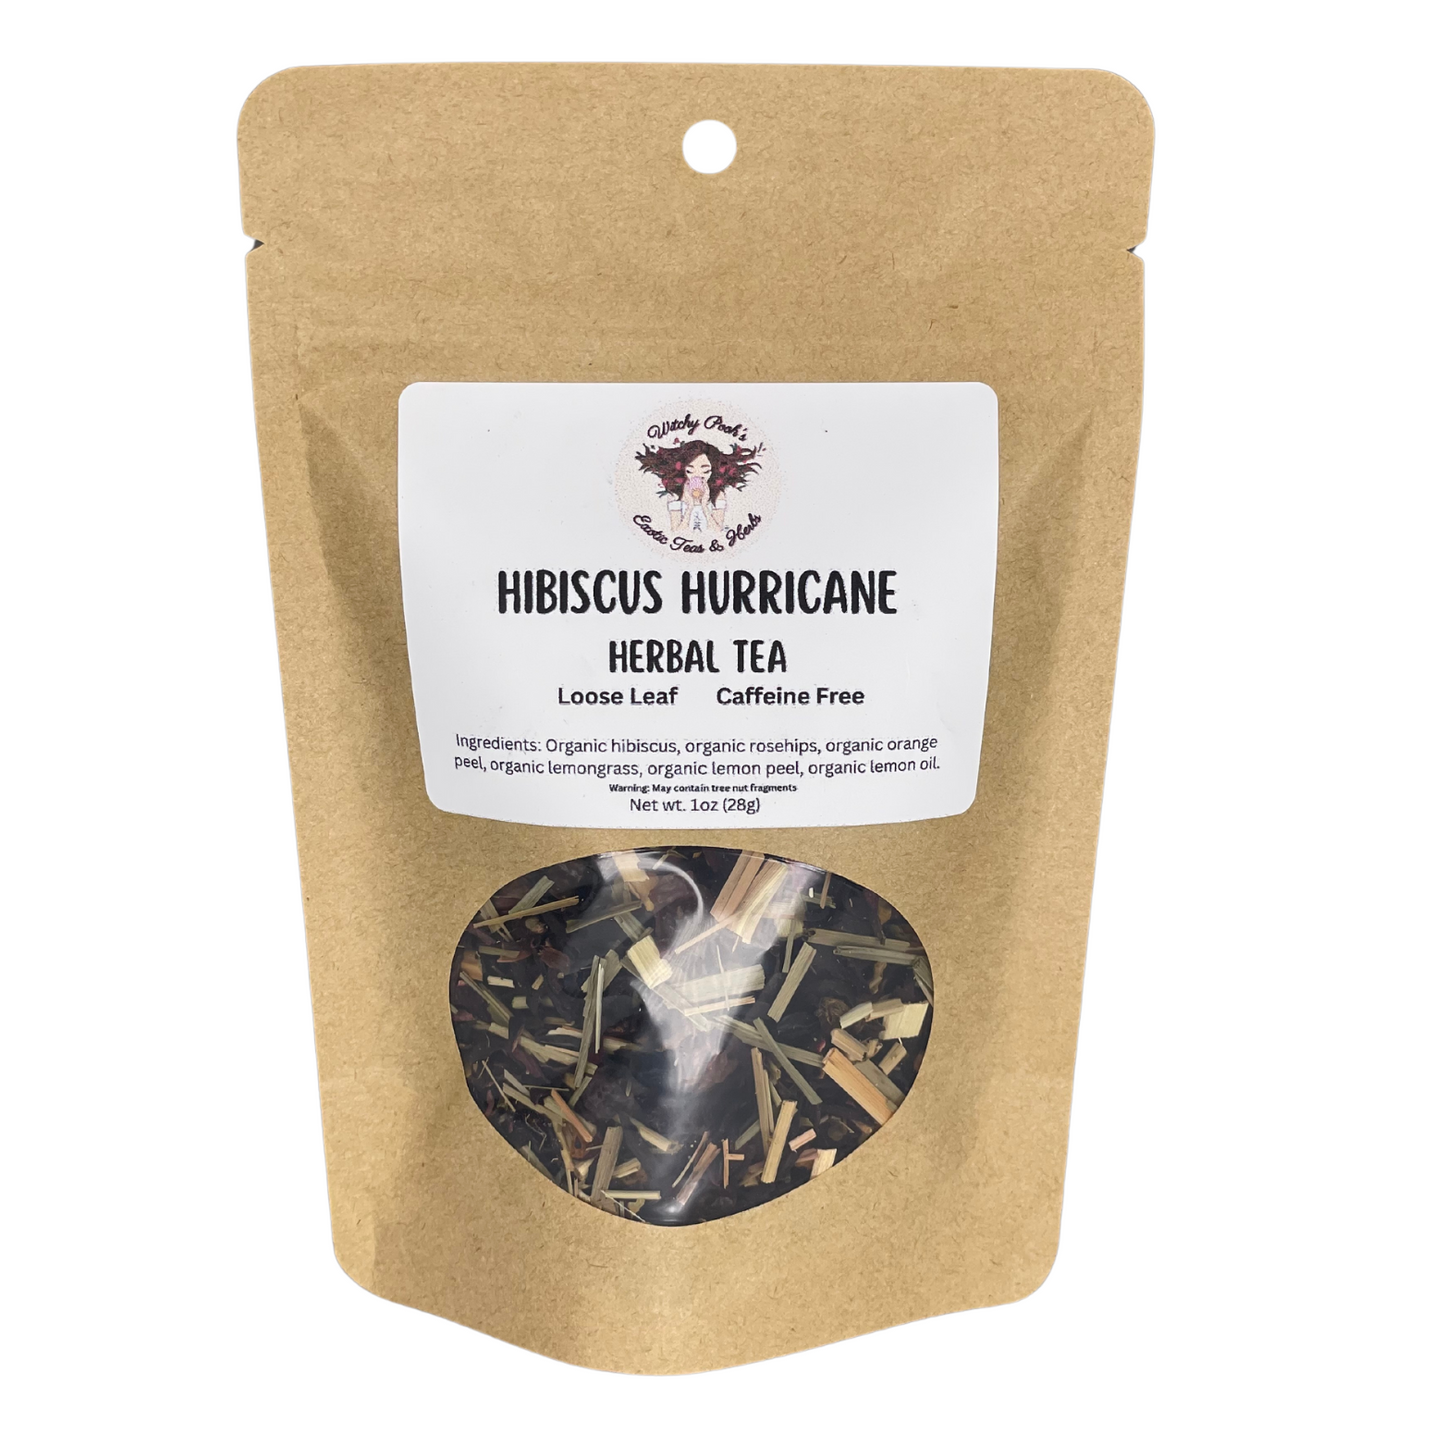 Hibiscus Hurricane Organic Loose Leaf Herbal Fruit Tea, Caffeine Free